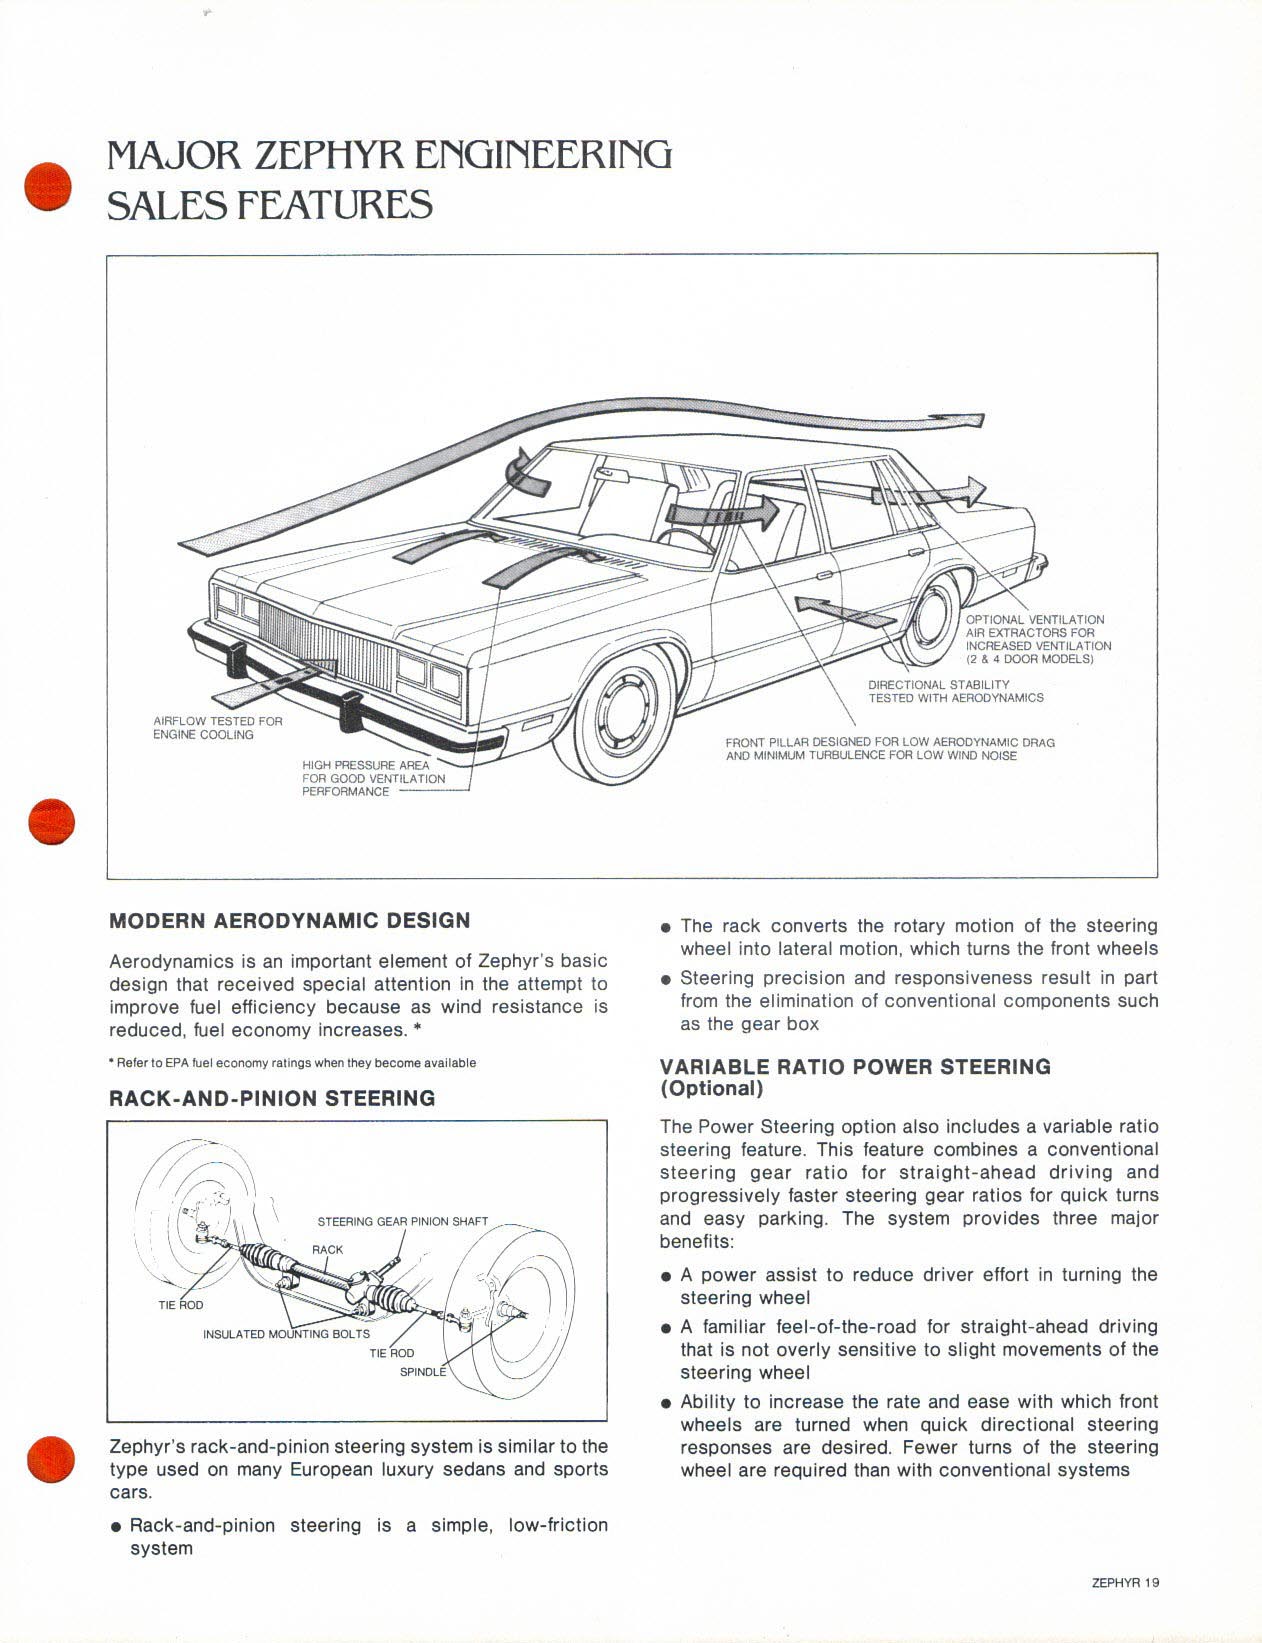 1980 Mercury Zephyr Fact Book Page 16